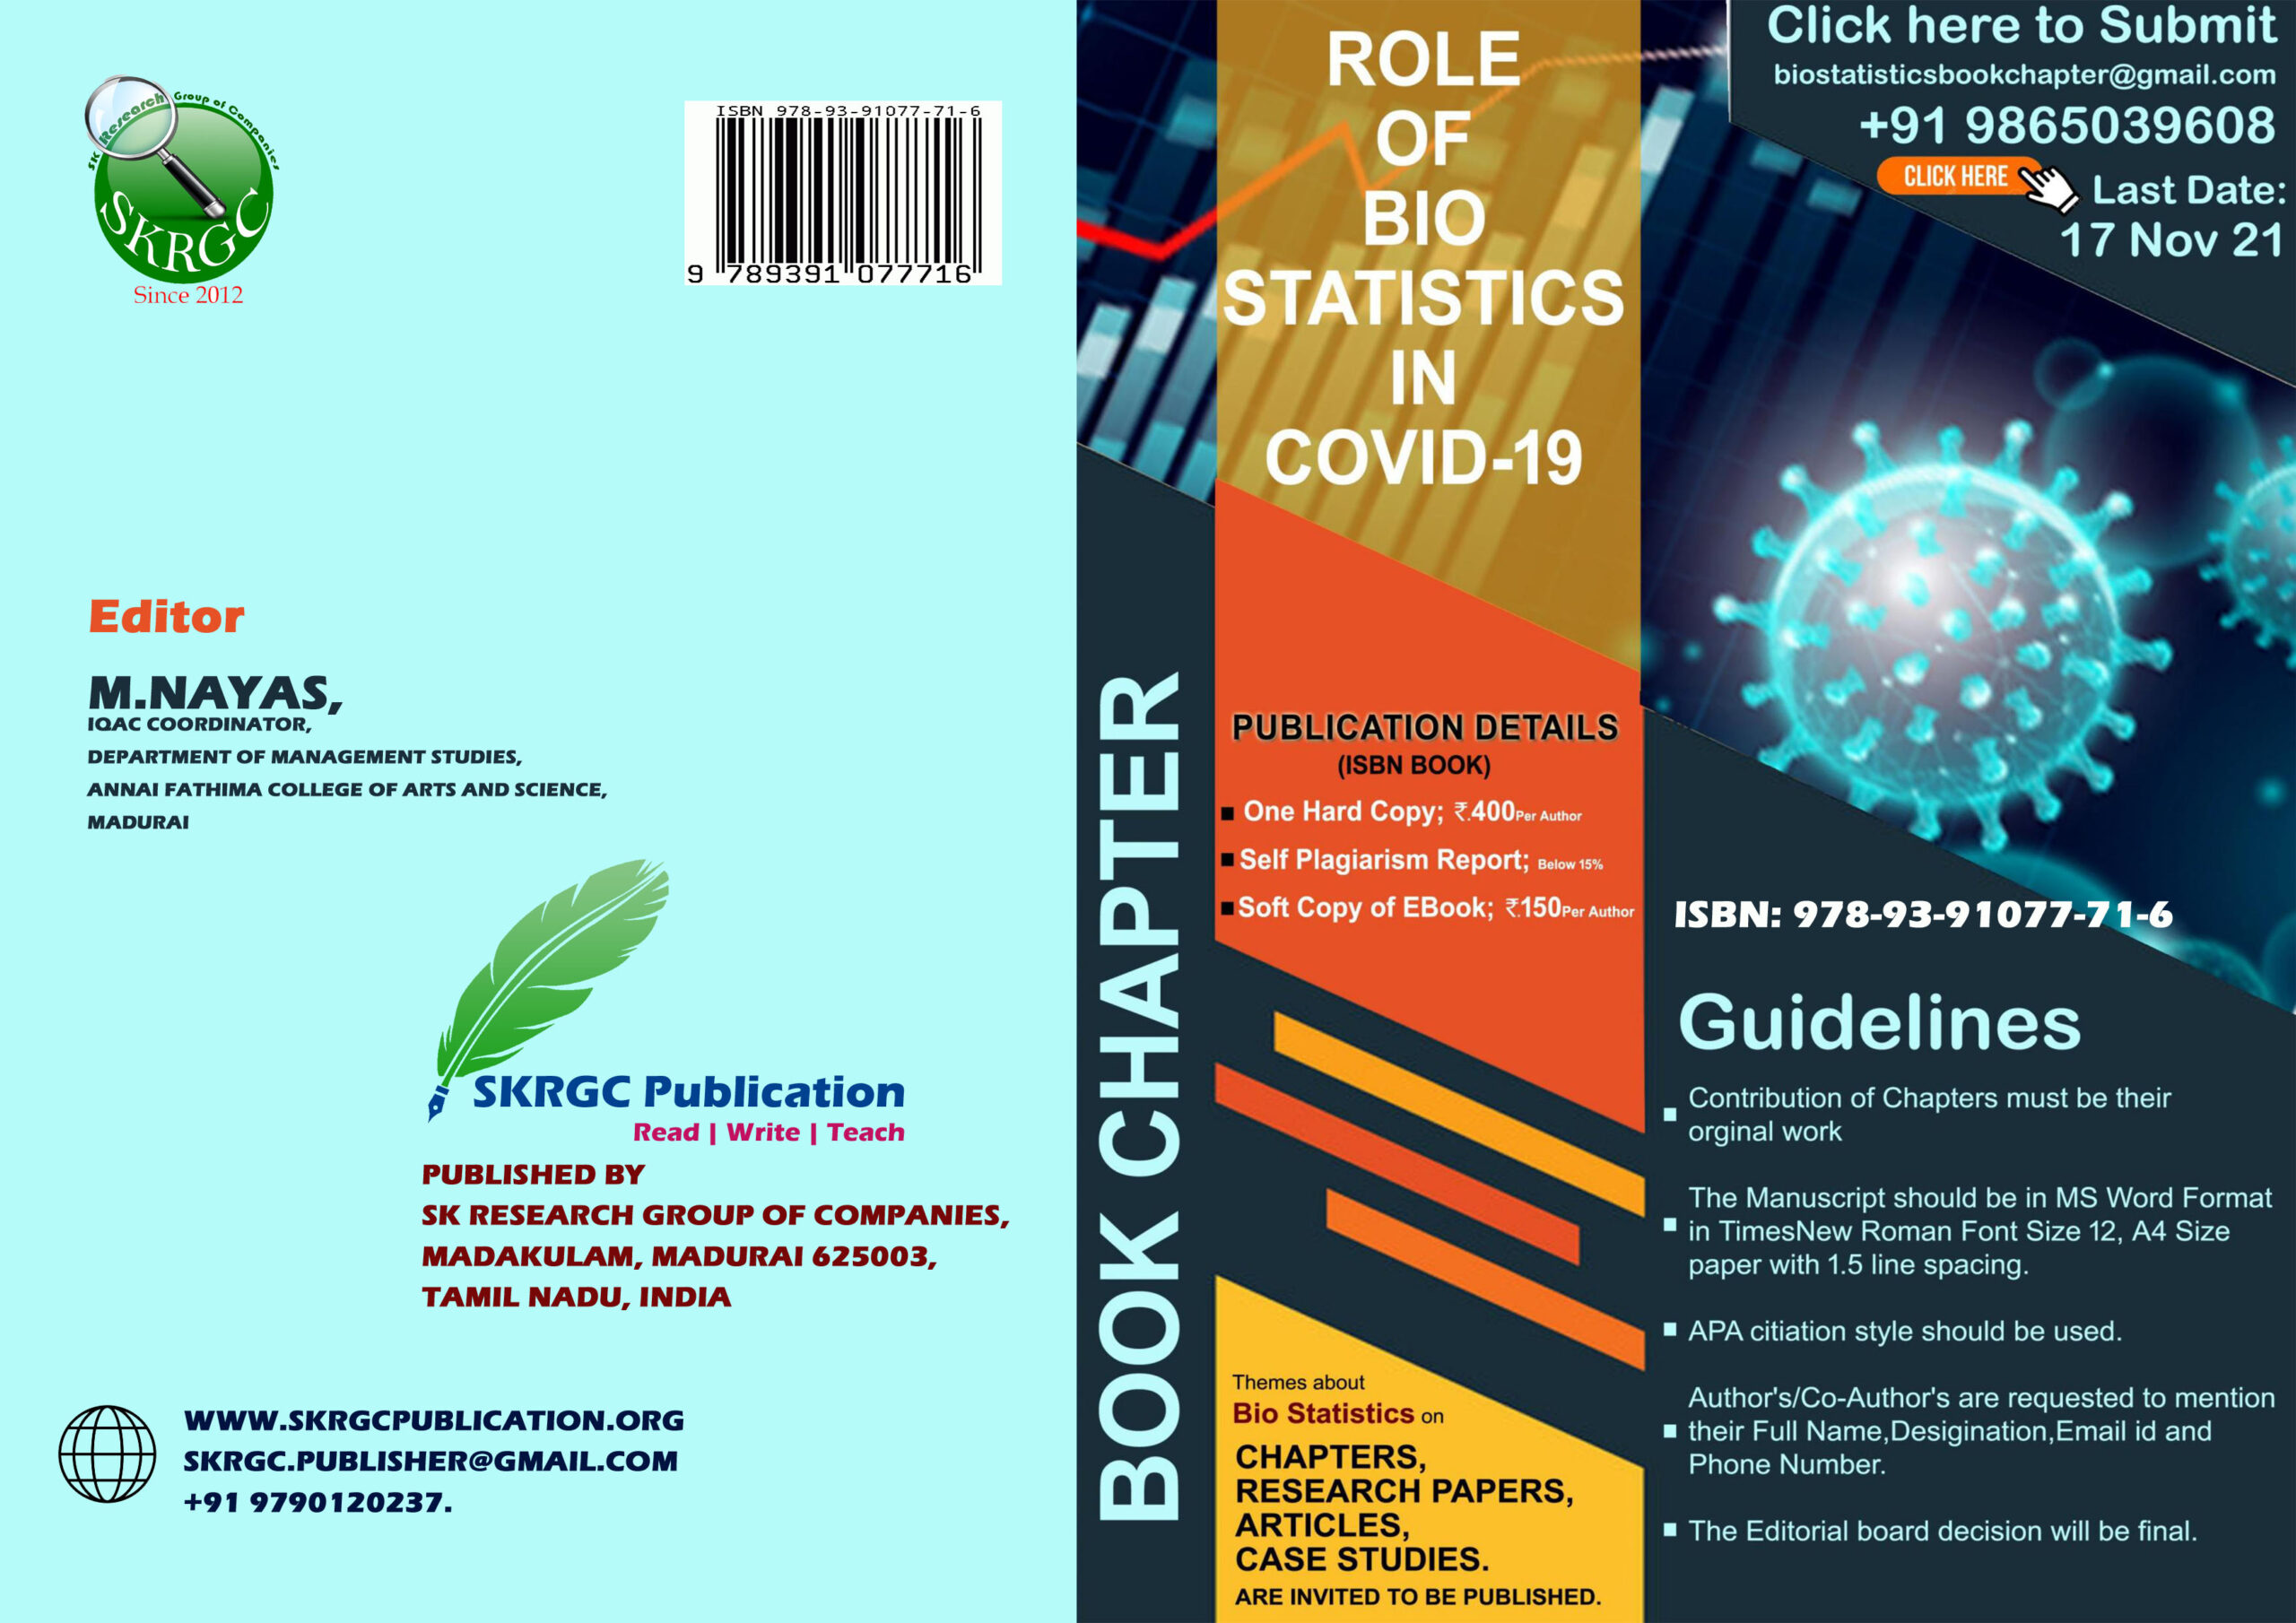 Role of Bio Statistics on Covid 19